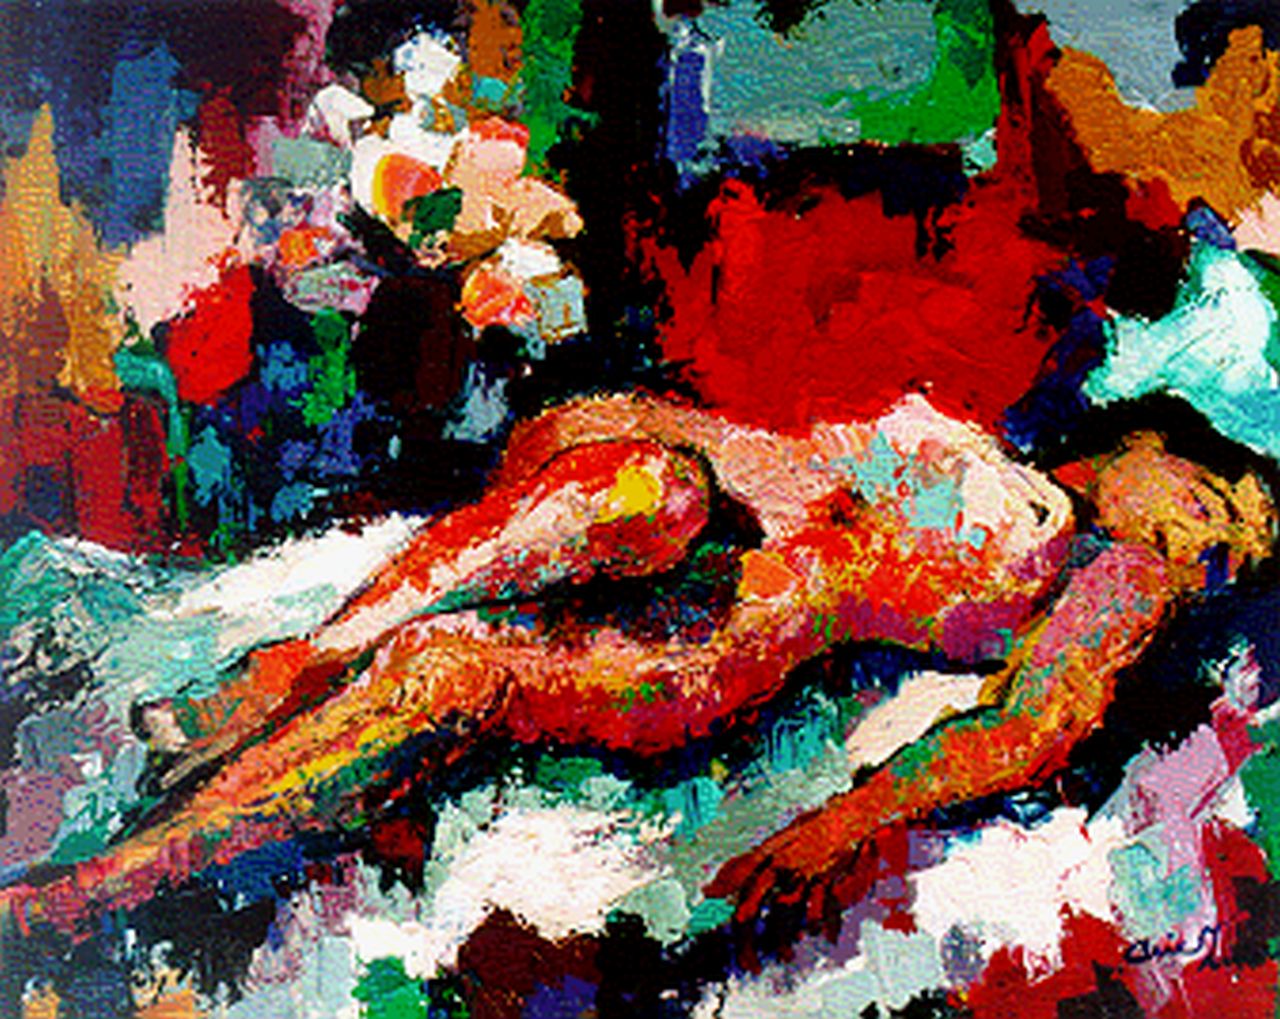 Zuidersma A.  | Arend 'Arie' Zuidersma, Reclining nude, Öl auf Leinwand 80,2 x 100,0 cm, signed l.r. und dated '70